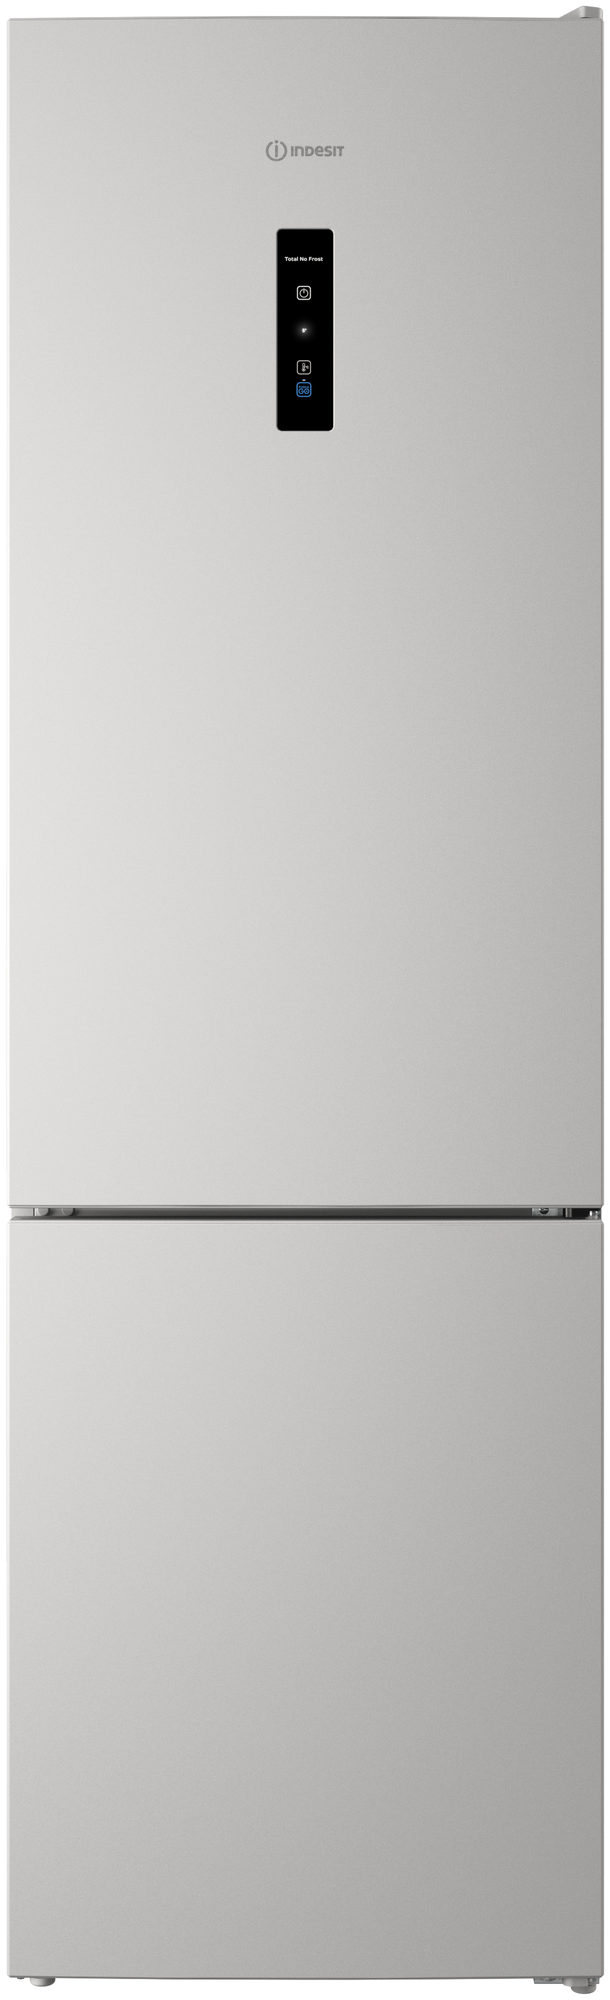 Холодильник Indesit ITR 5200 S серебристый - фото №1